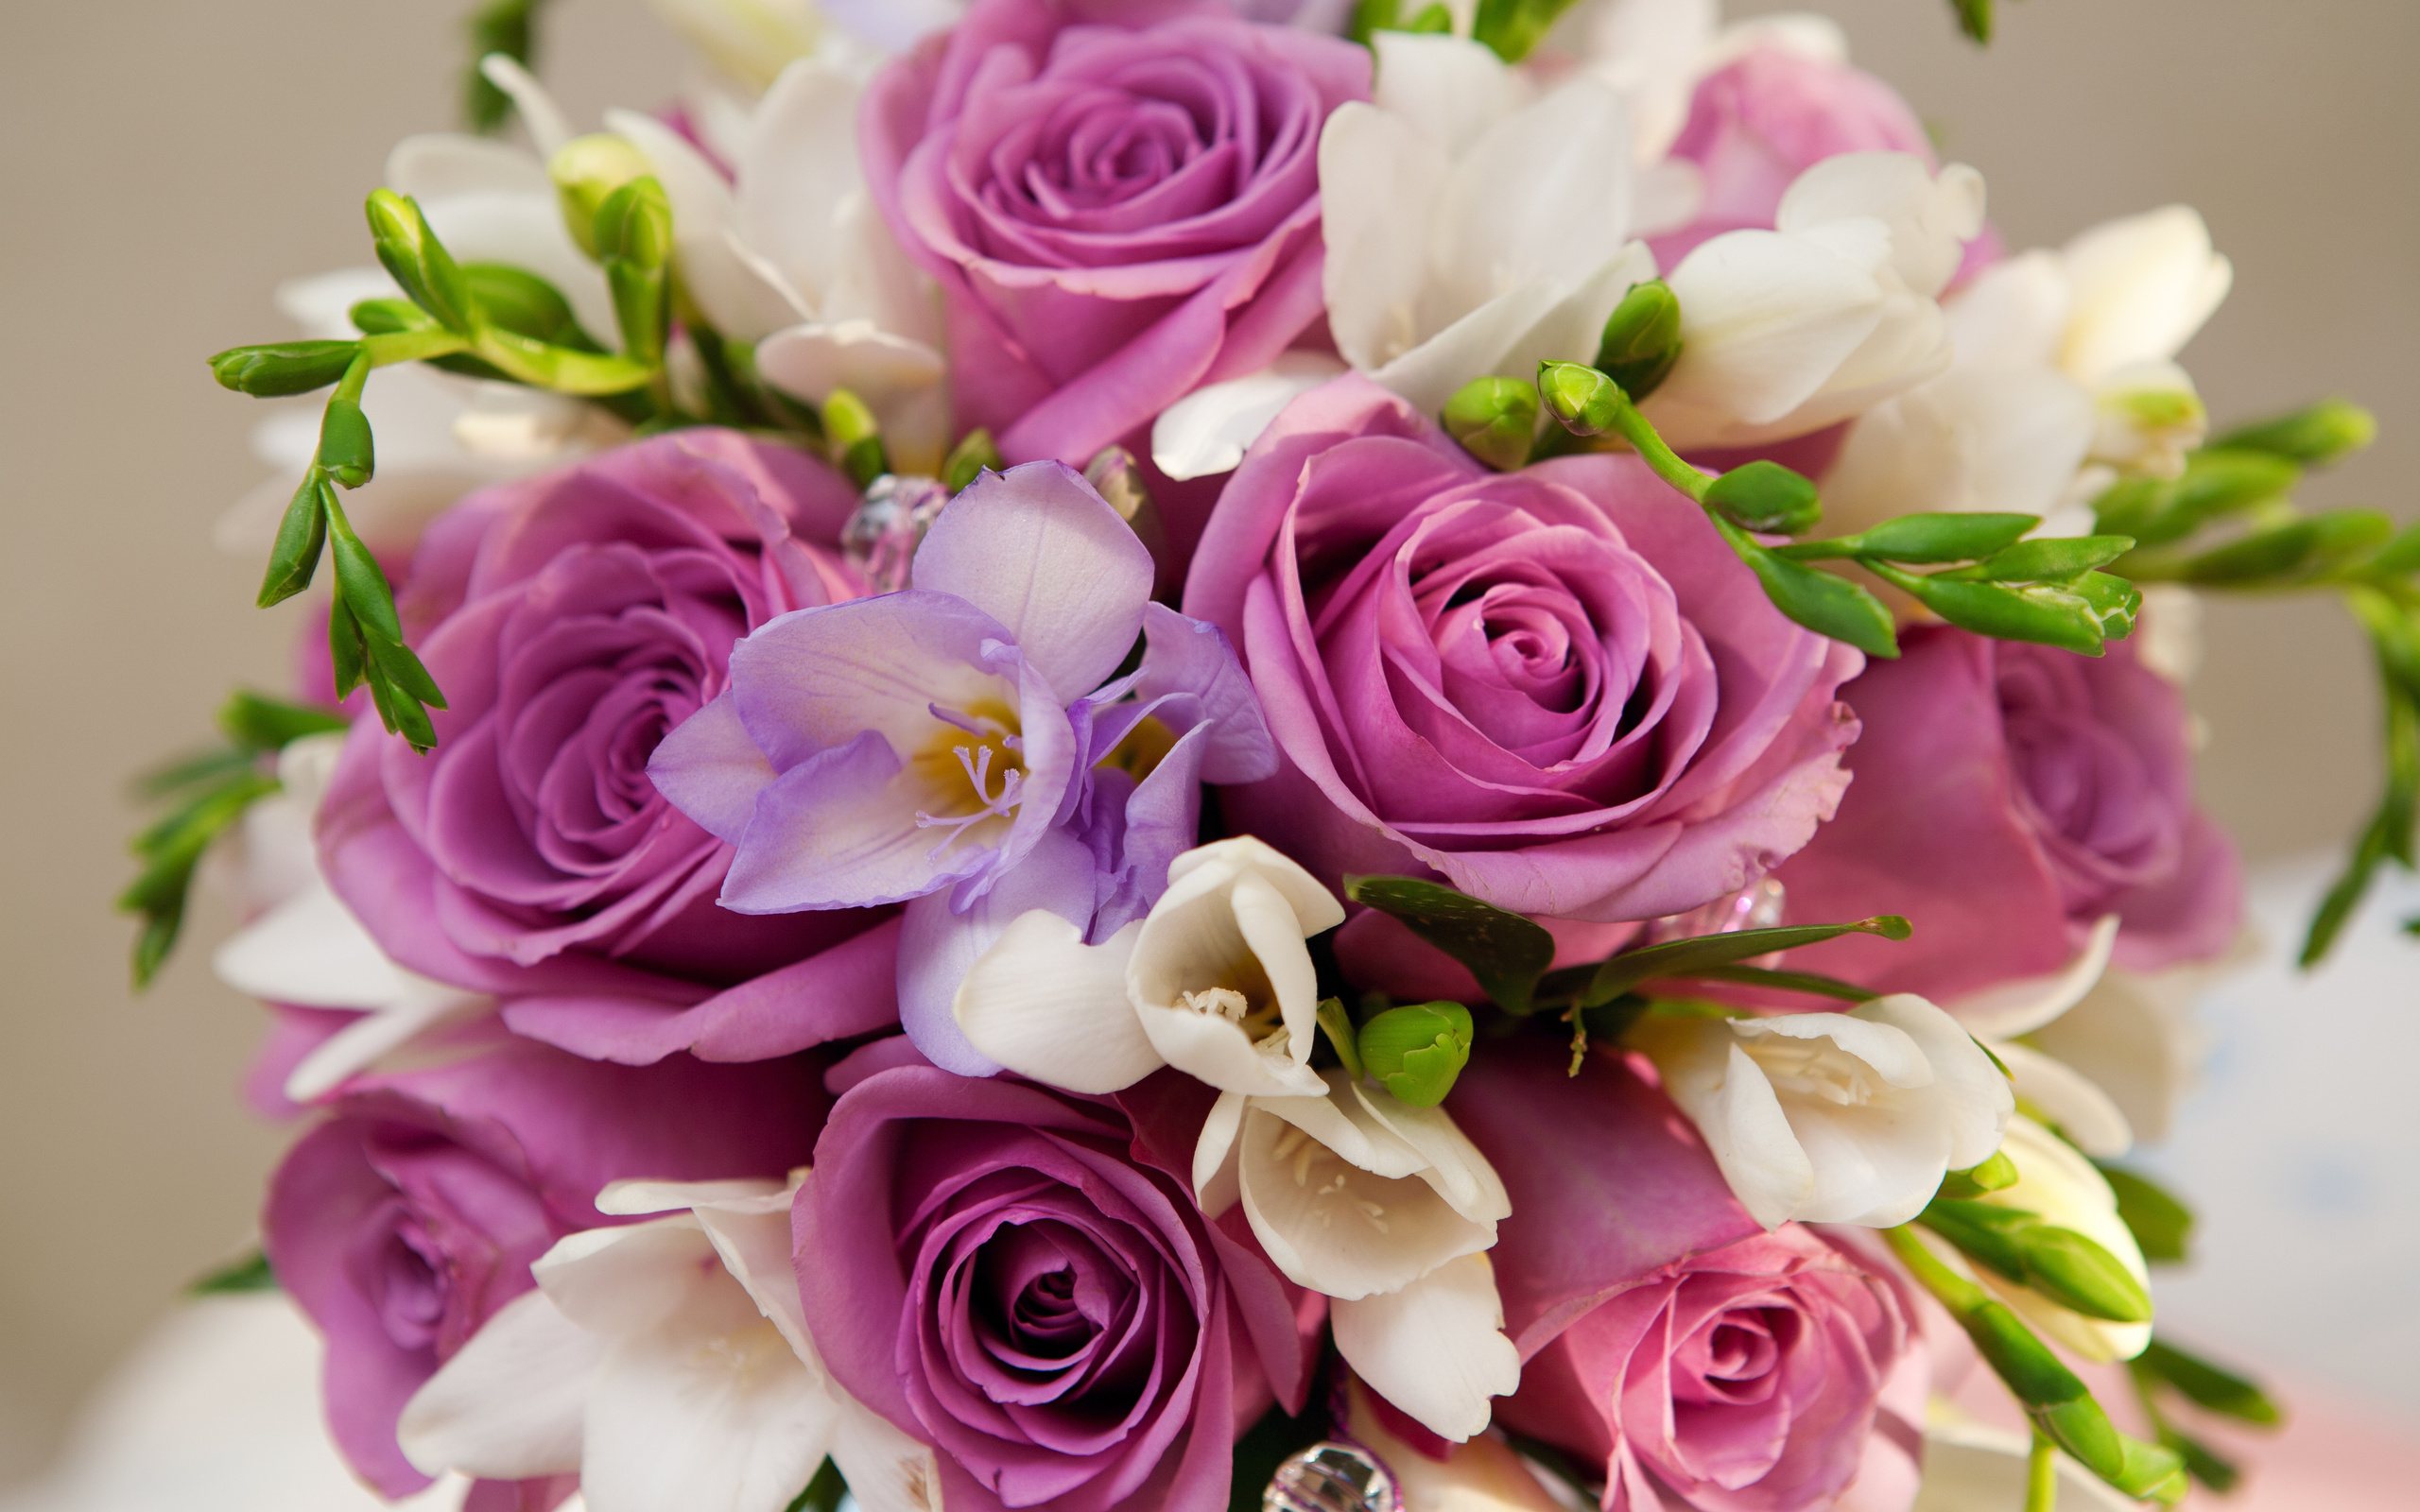 Top Beautiful Bouquet Of Flowers Photos, 51-100% Quality HD, SH VM